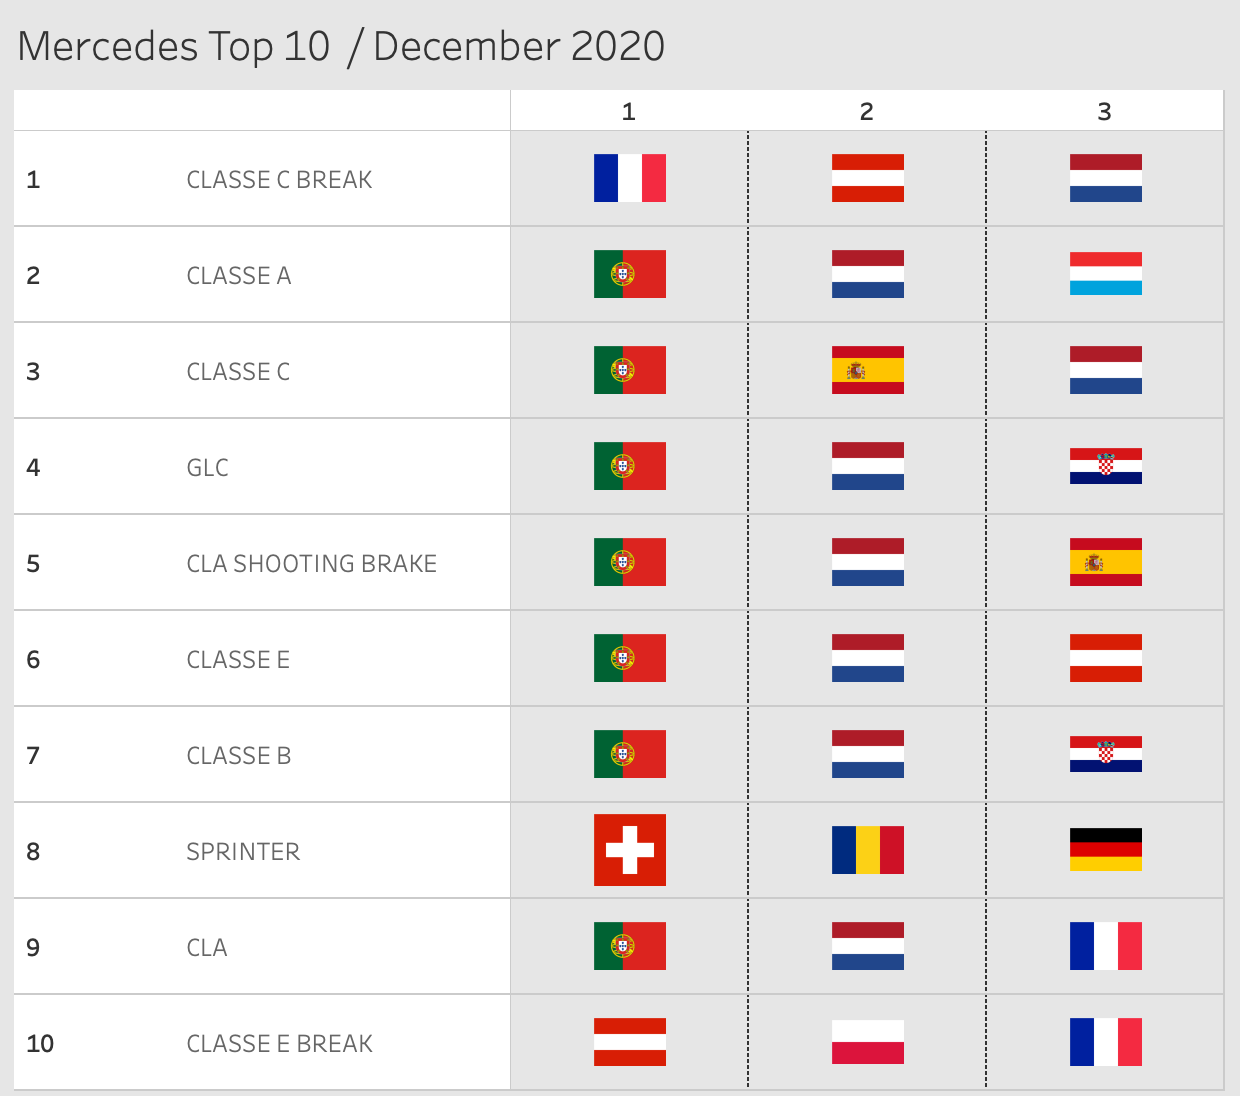 Mercedes Top 10 December